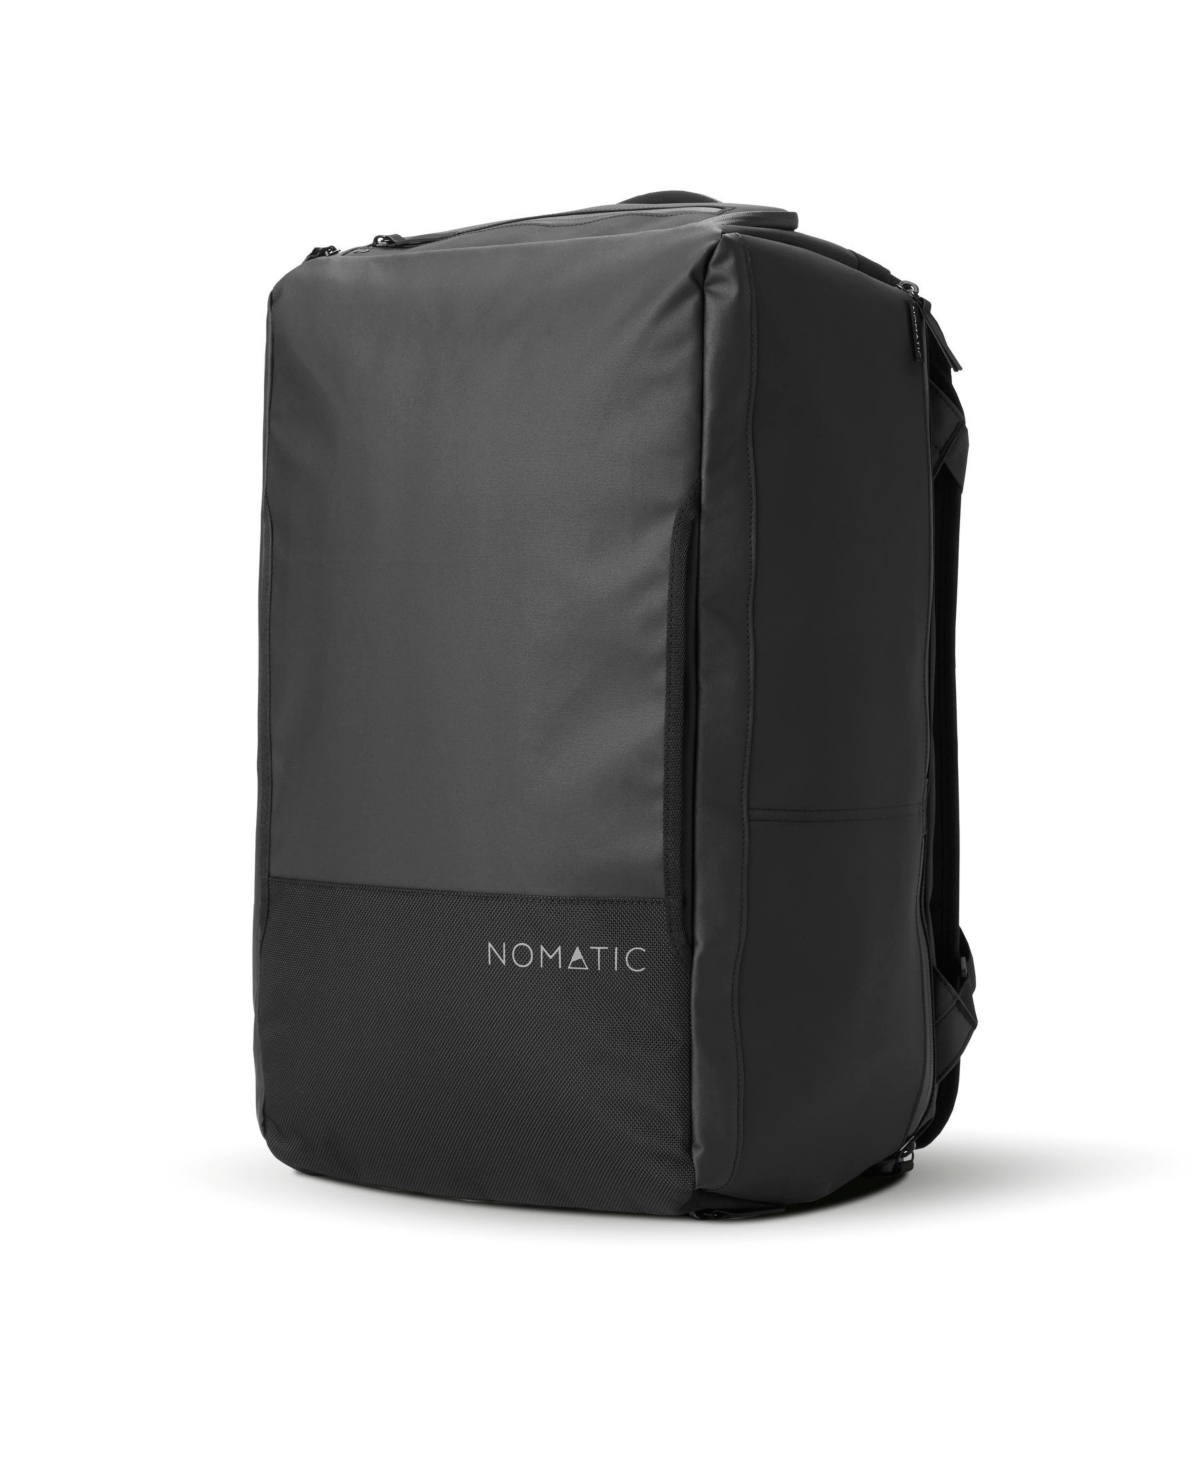 40L Travel Bag - One Bag Carry-On Travel Duffel/Backpack - Black